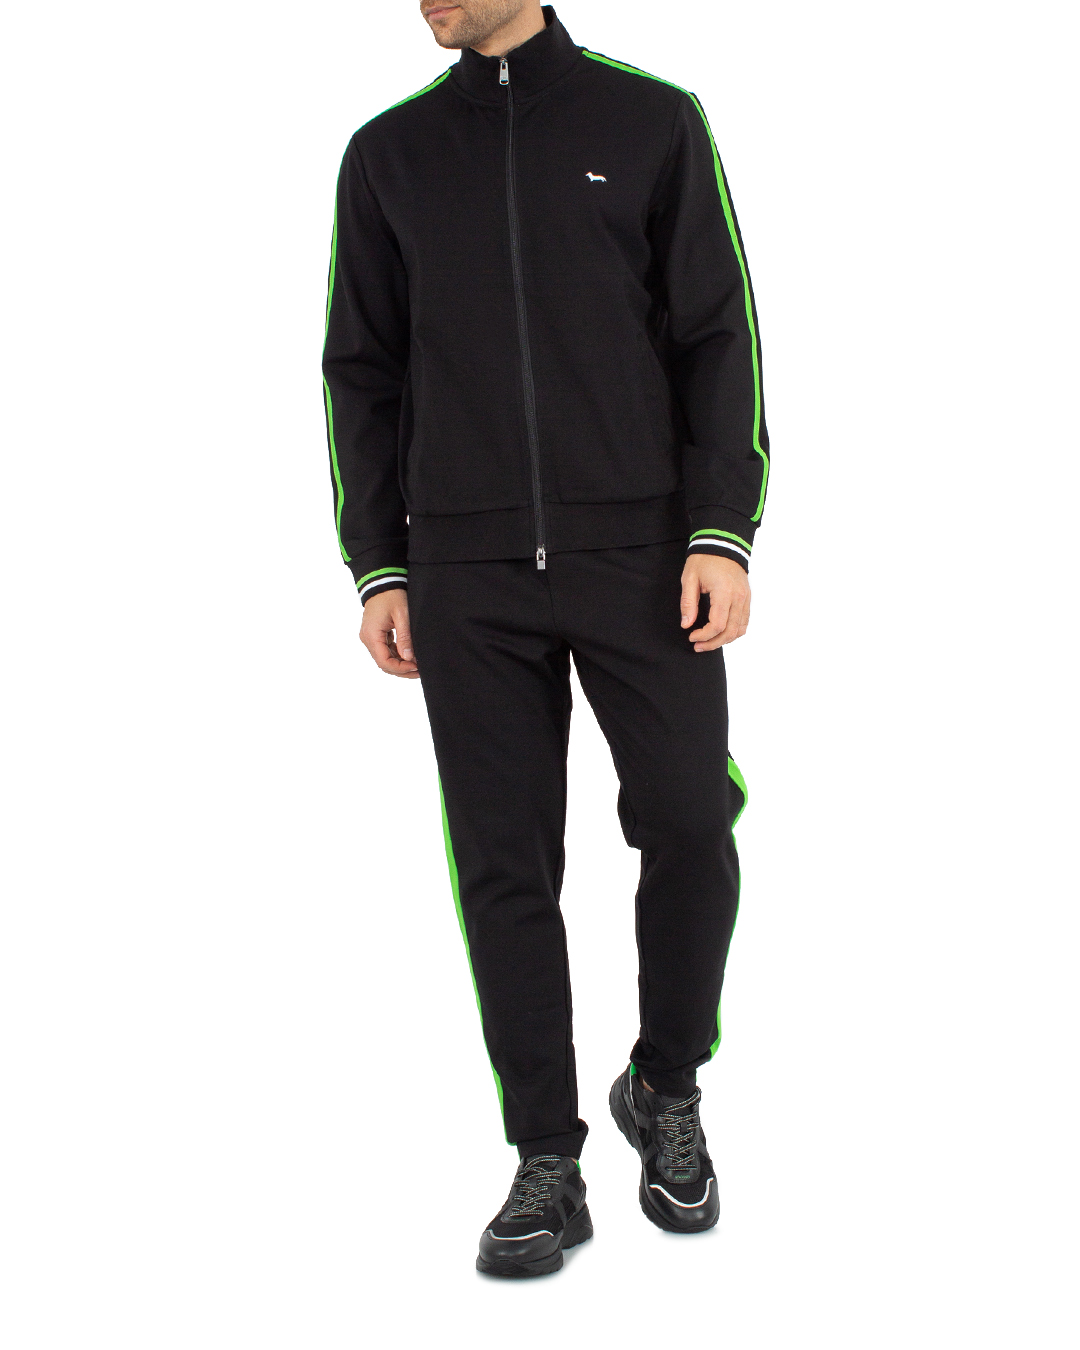 брюки Harmont & Blaine FRK155 черный+зеленый l, размер l, цвет черный+зеленый FRK155 черный+зеленый l - фото 2